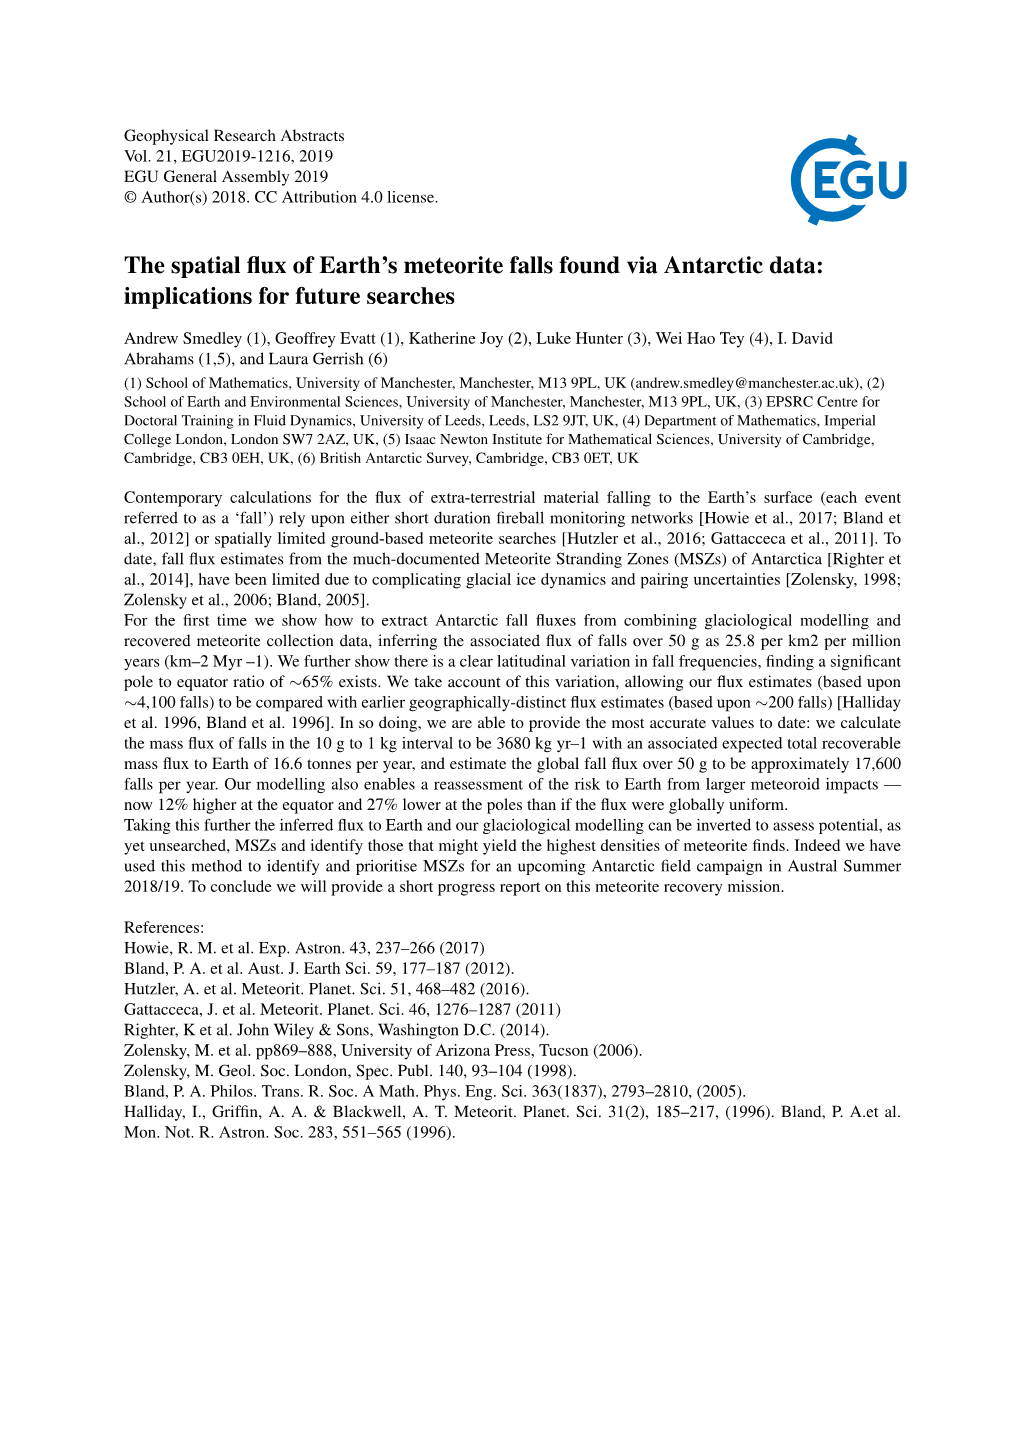 The Spatial Flux of Earth's Meteorite Falls Found Via Antarctic Data